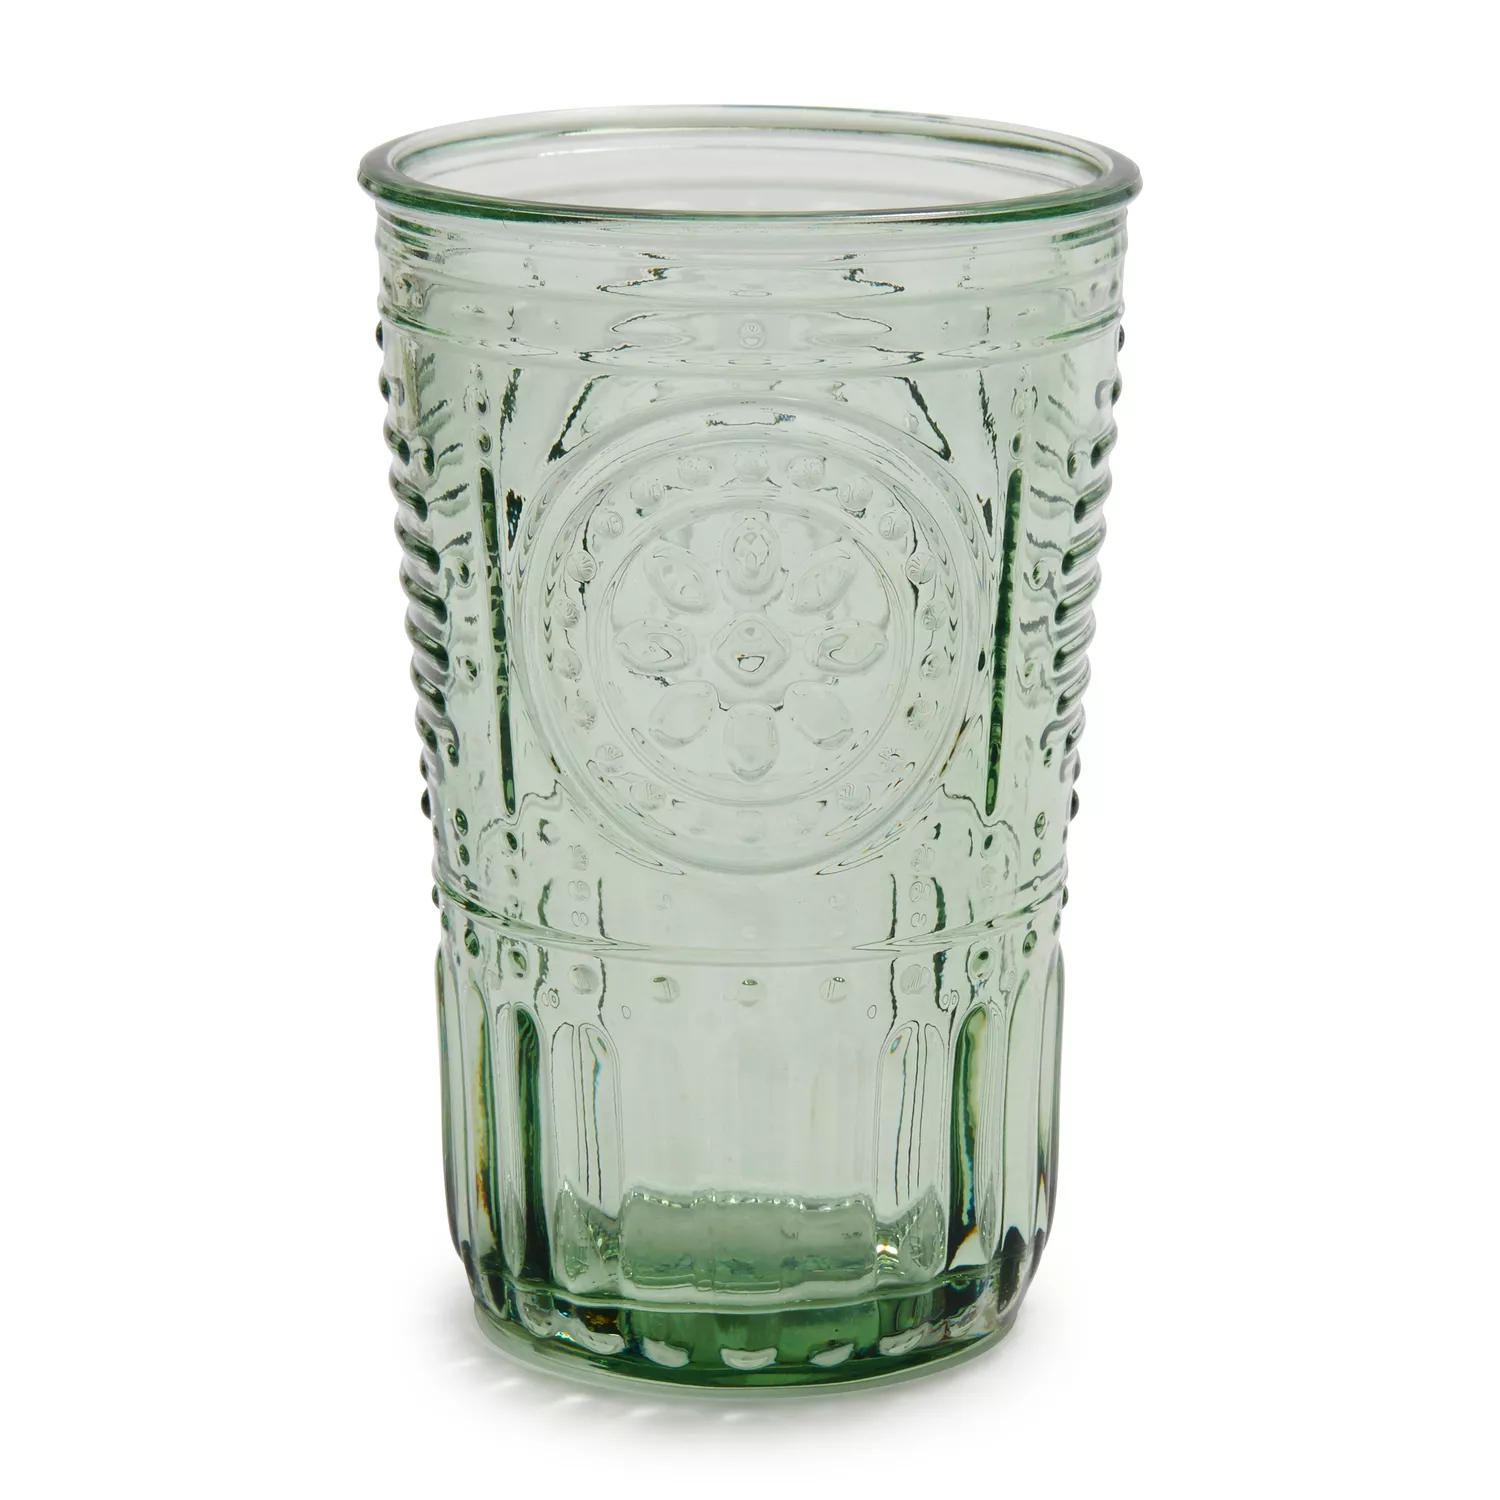 Bormioli Rocco Romantic Set of 6 Stemware Glasses, 10.75 oz. Colored Crystal Glass, Pastel Green, Made in Italy